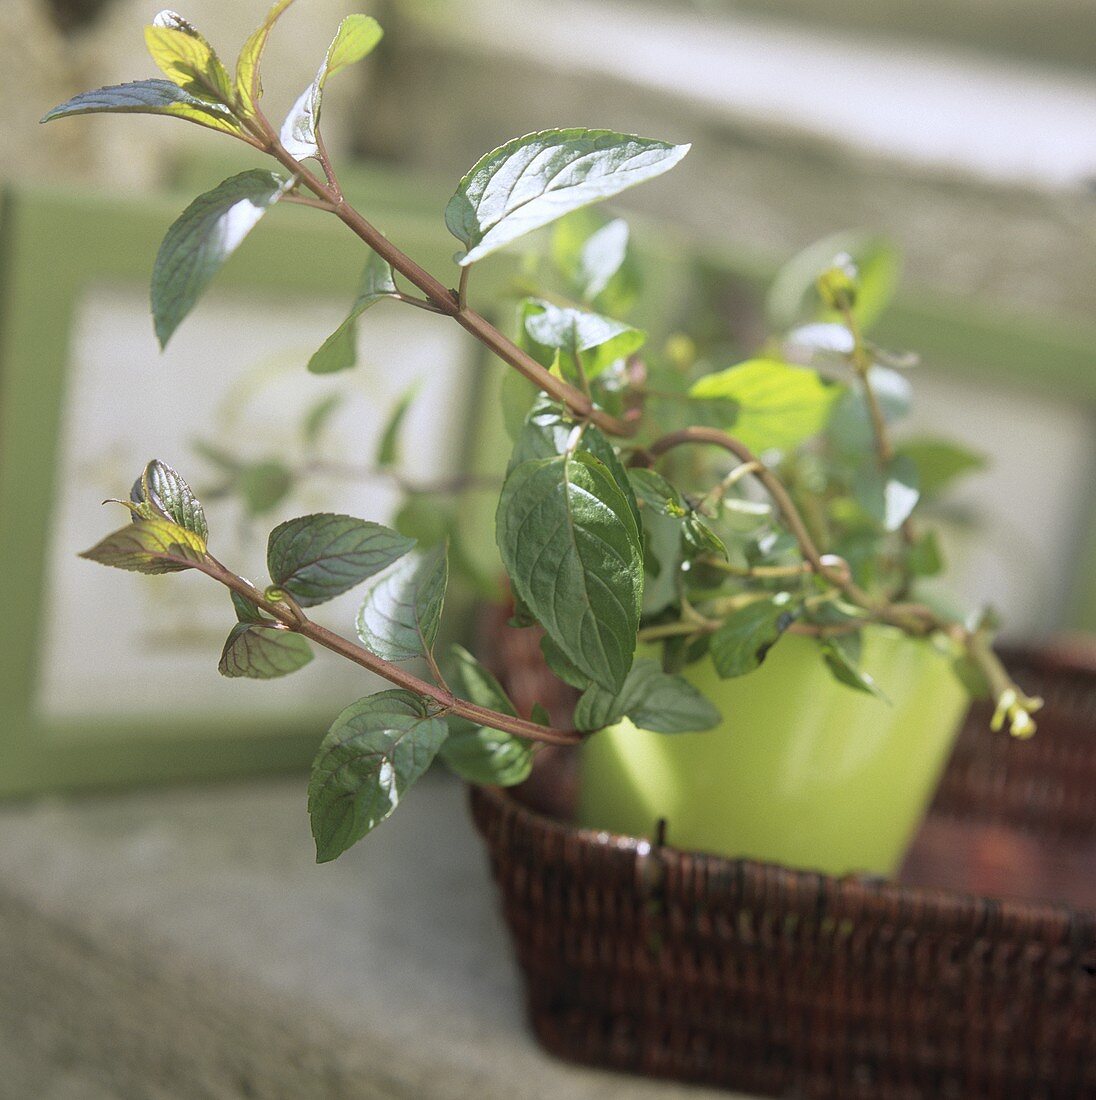 Pfefferminzpflanze (Mentha x piperita) im Blumentopf